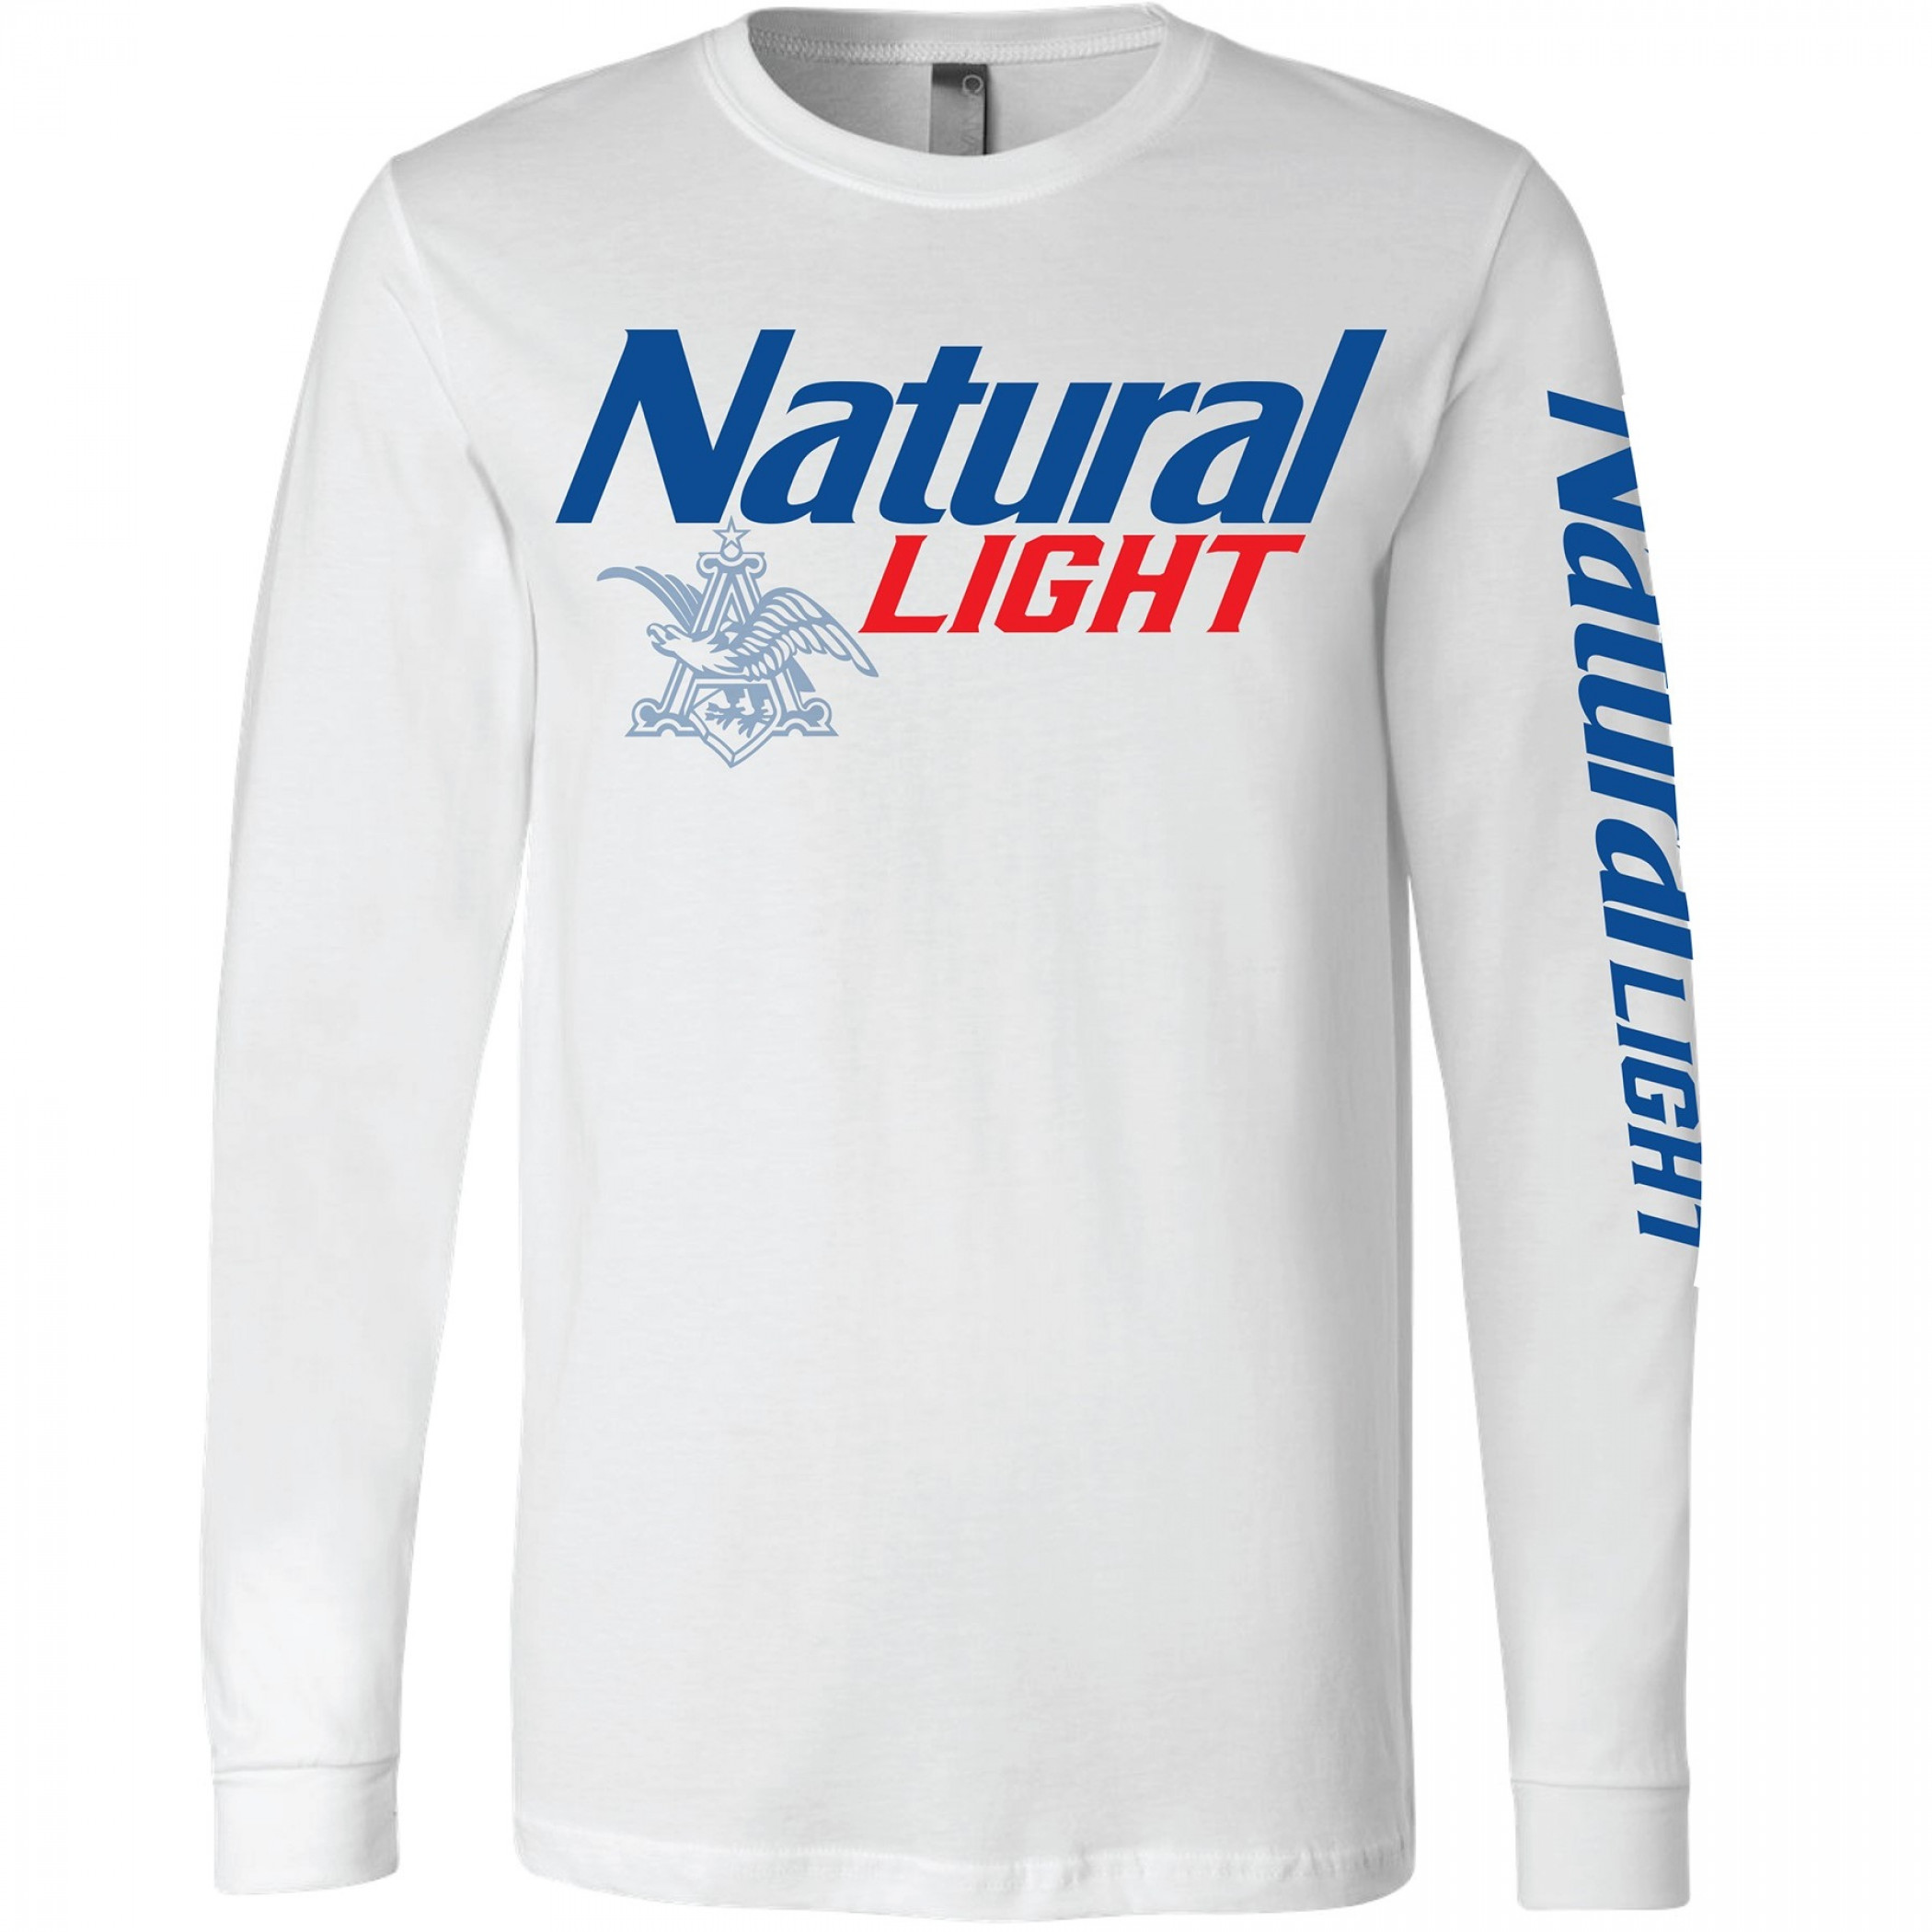 Natural Light Sleeve Print Long Sleeve Shirt